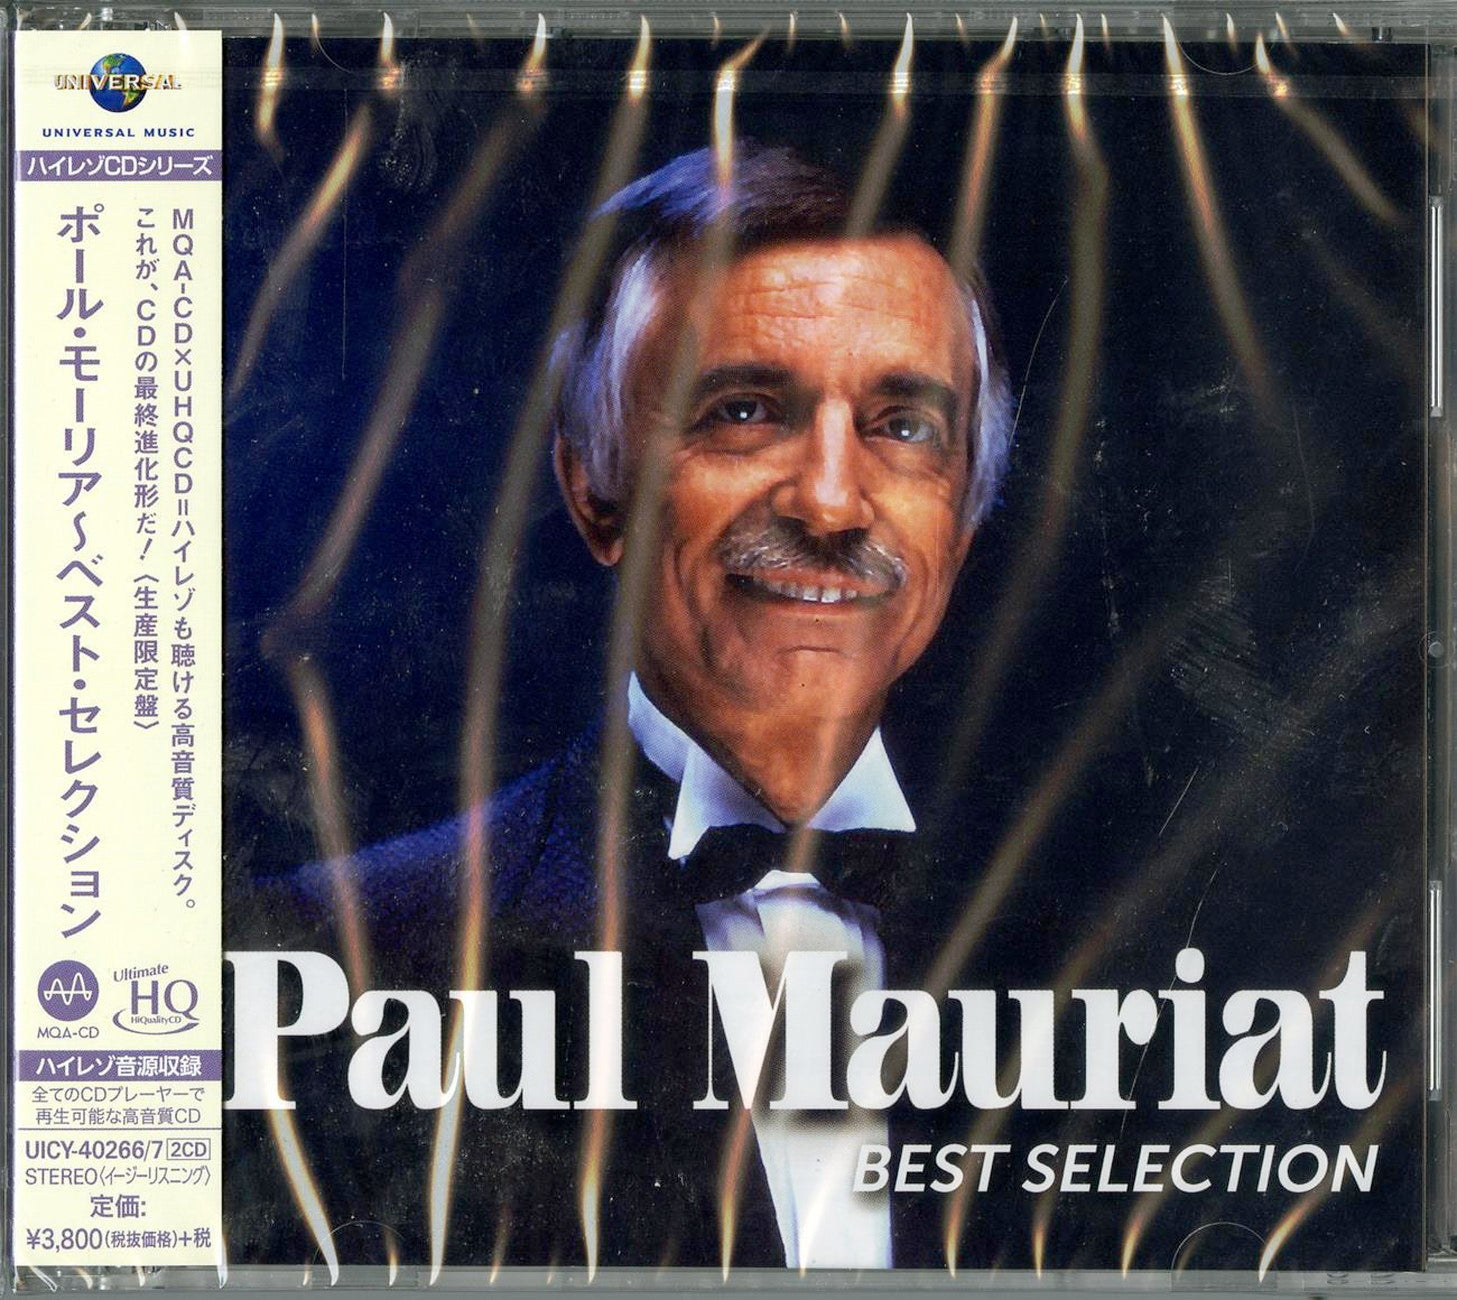 Paul Mauriat - Paul Mauriat Best Selection - Japan 2 UHQCD Limited Edi –  CDs Vinyl Japan Store